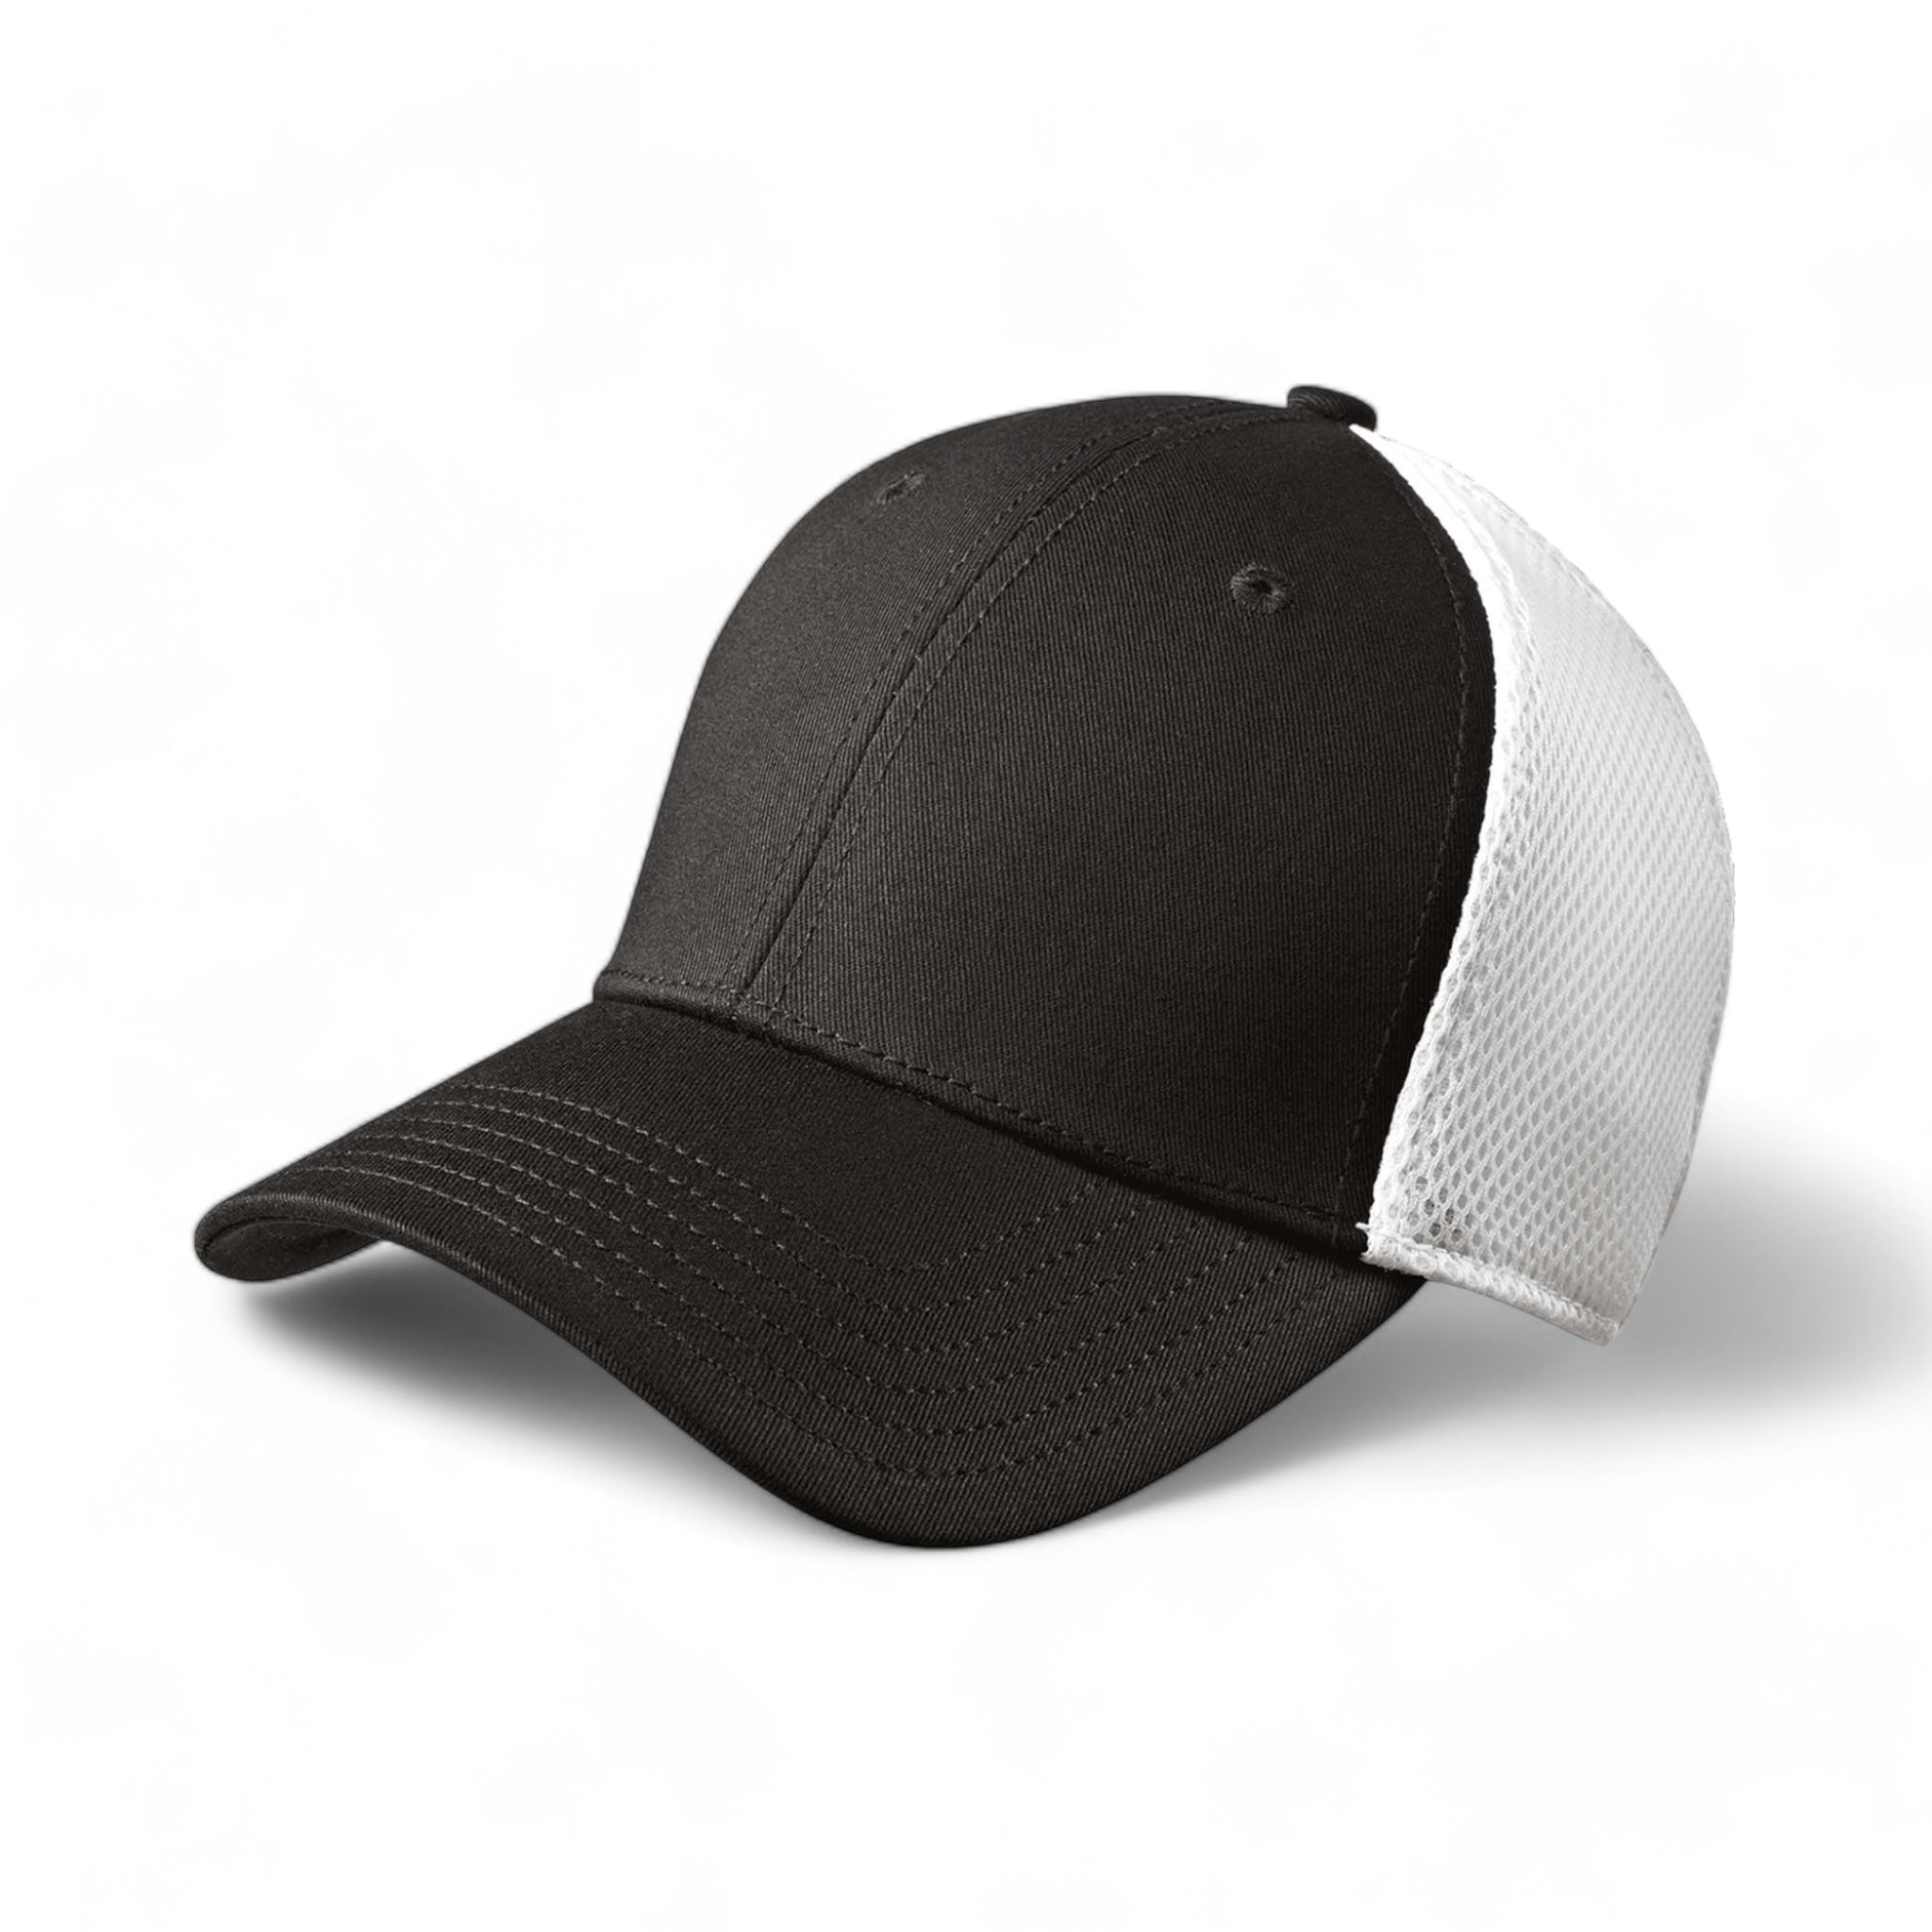 Side view of New Era NE1020 custom hat in black and white